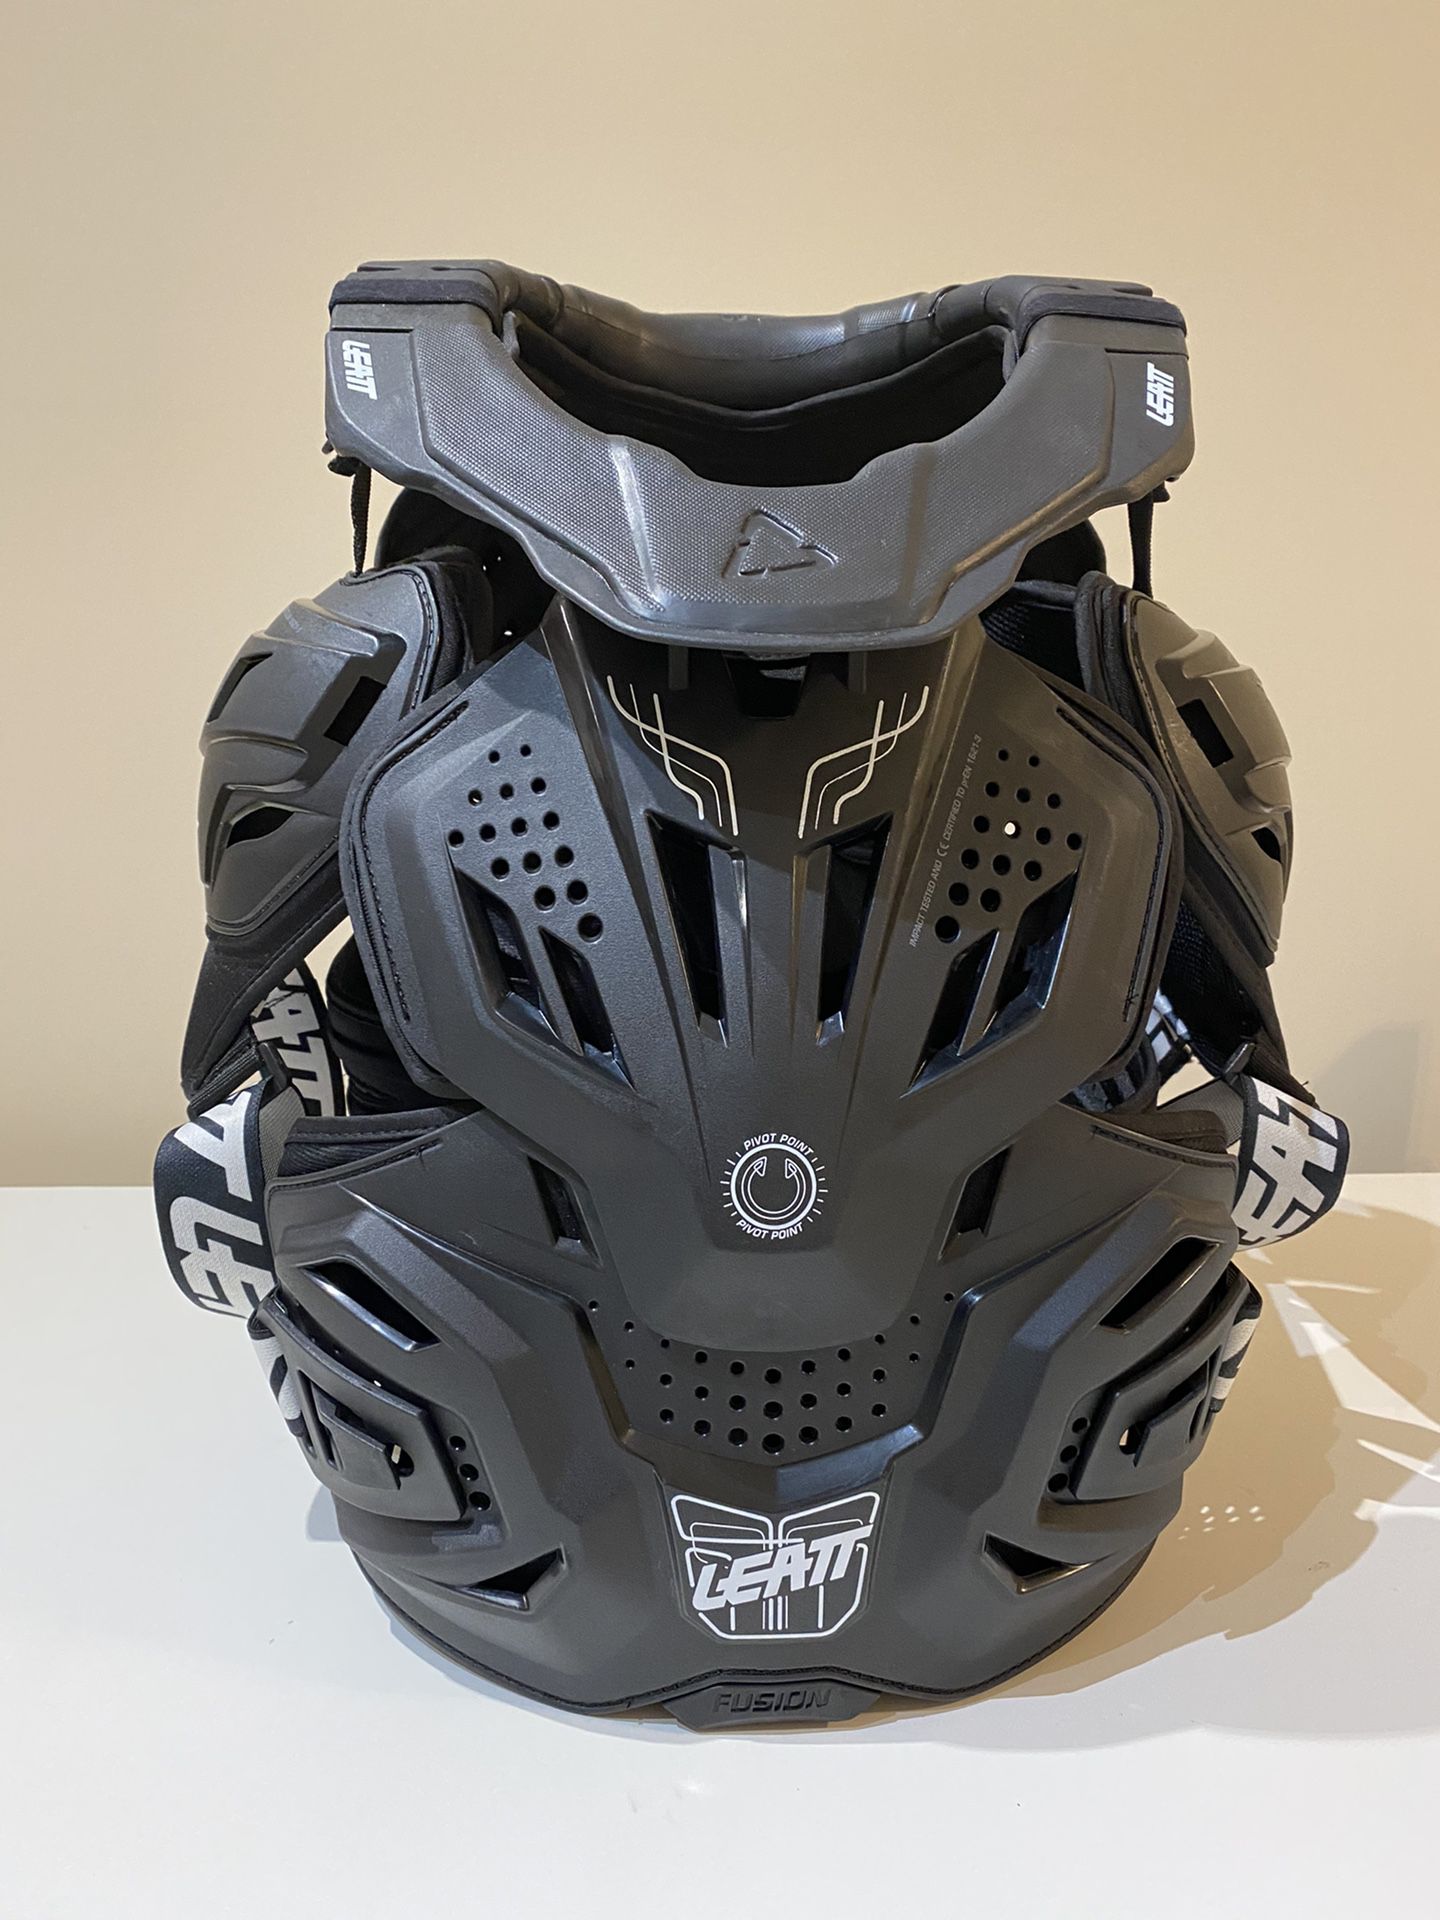 Dirty Bike Leat Vest Fusion 3.0